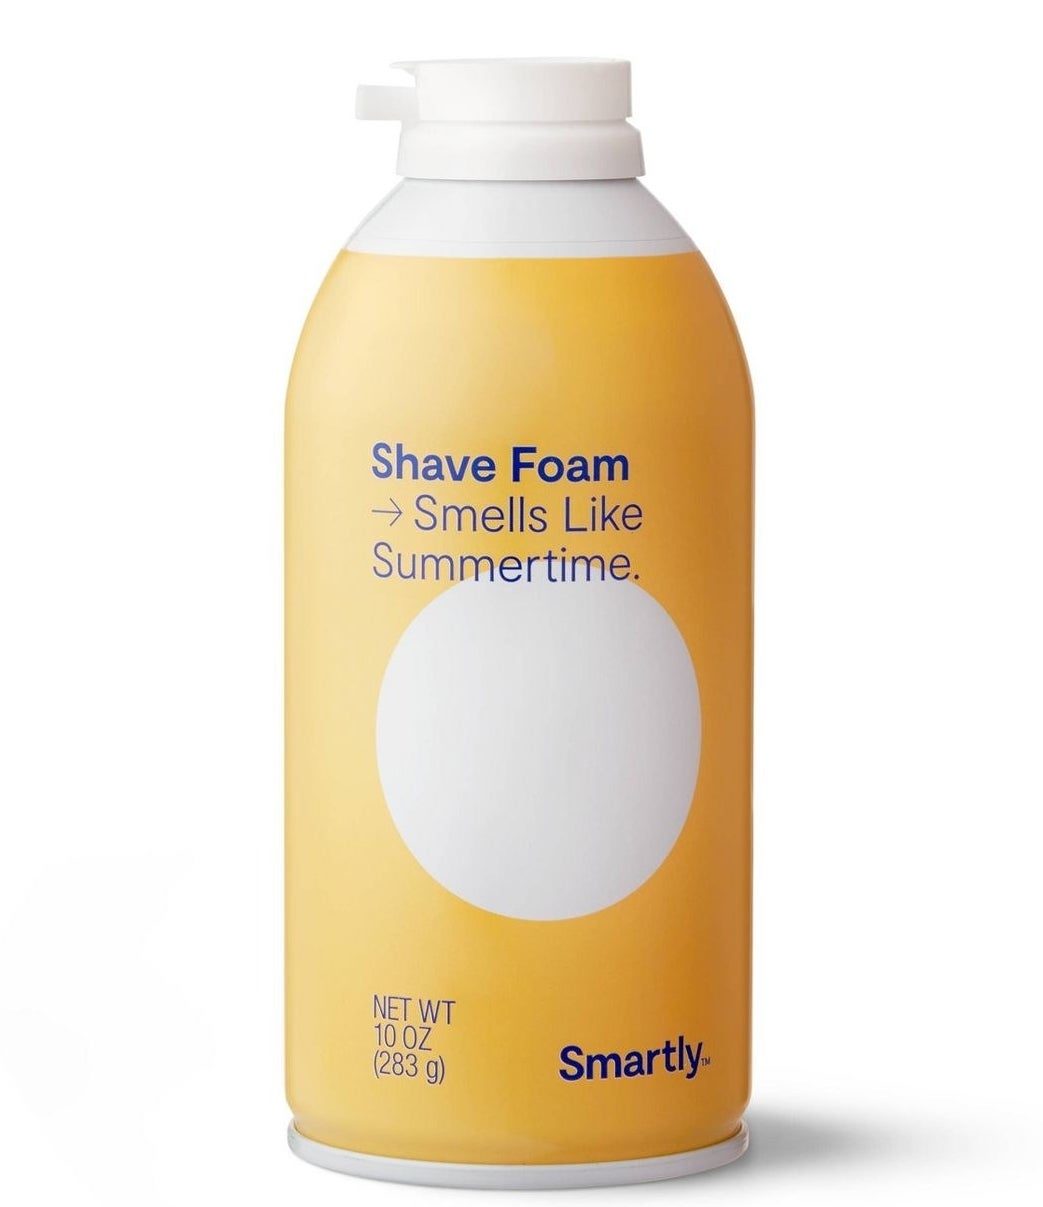 The scented shaving foam